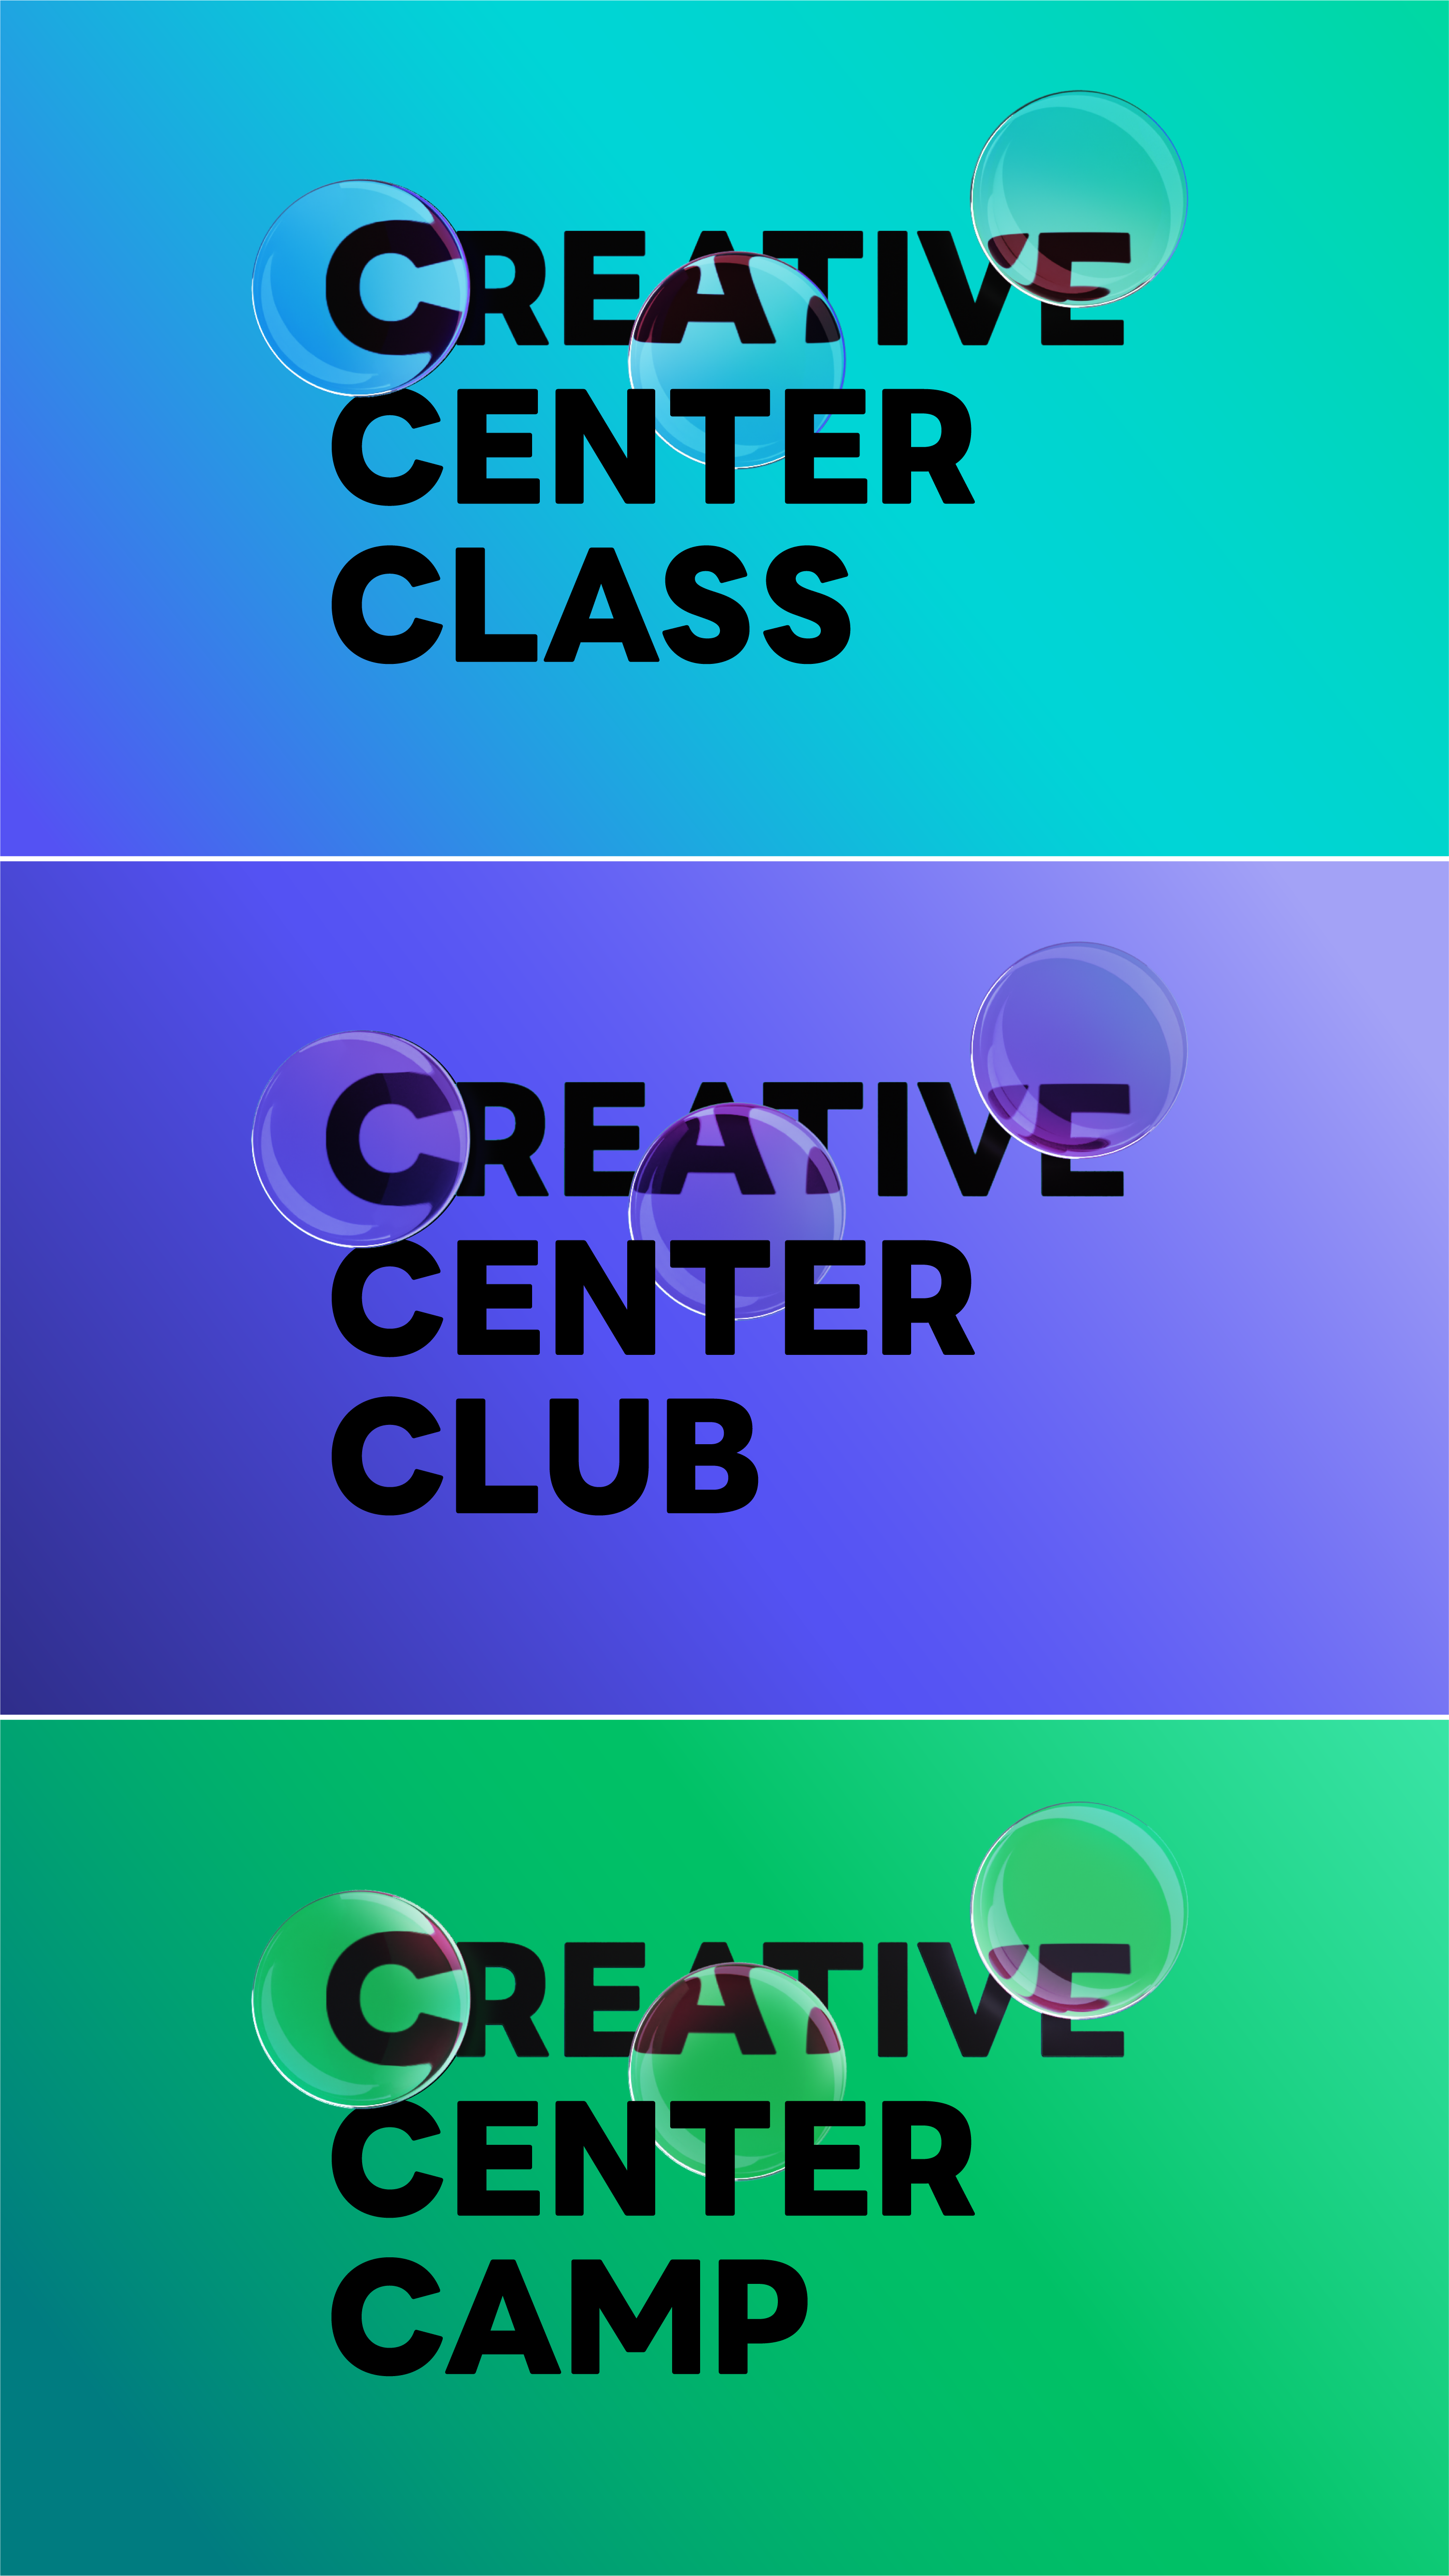 CREATIVE CENTER CLASS/CLUB/CAMP